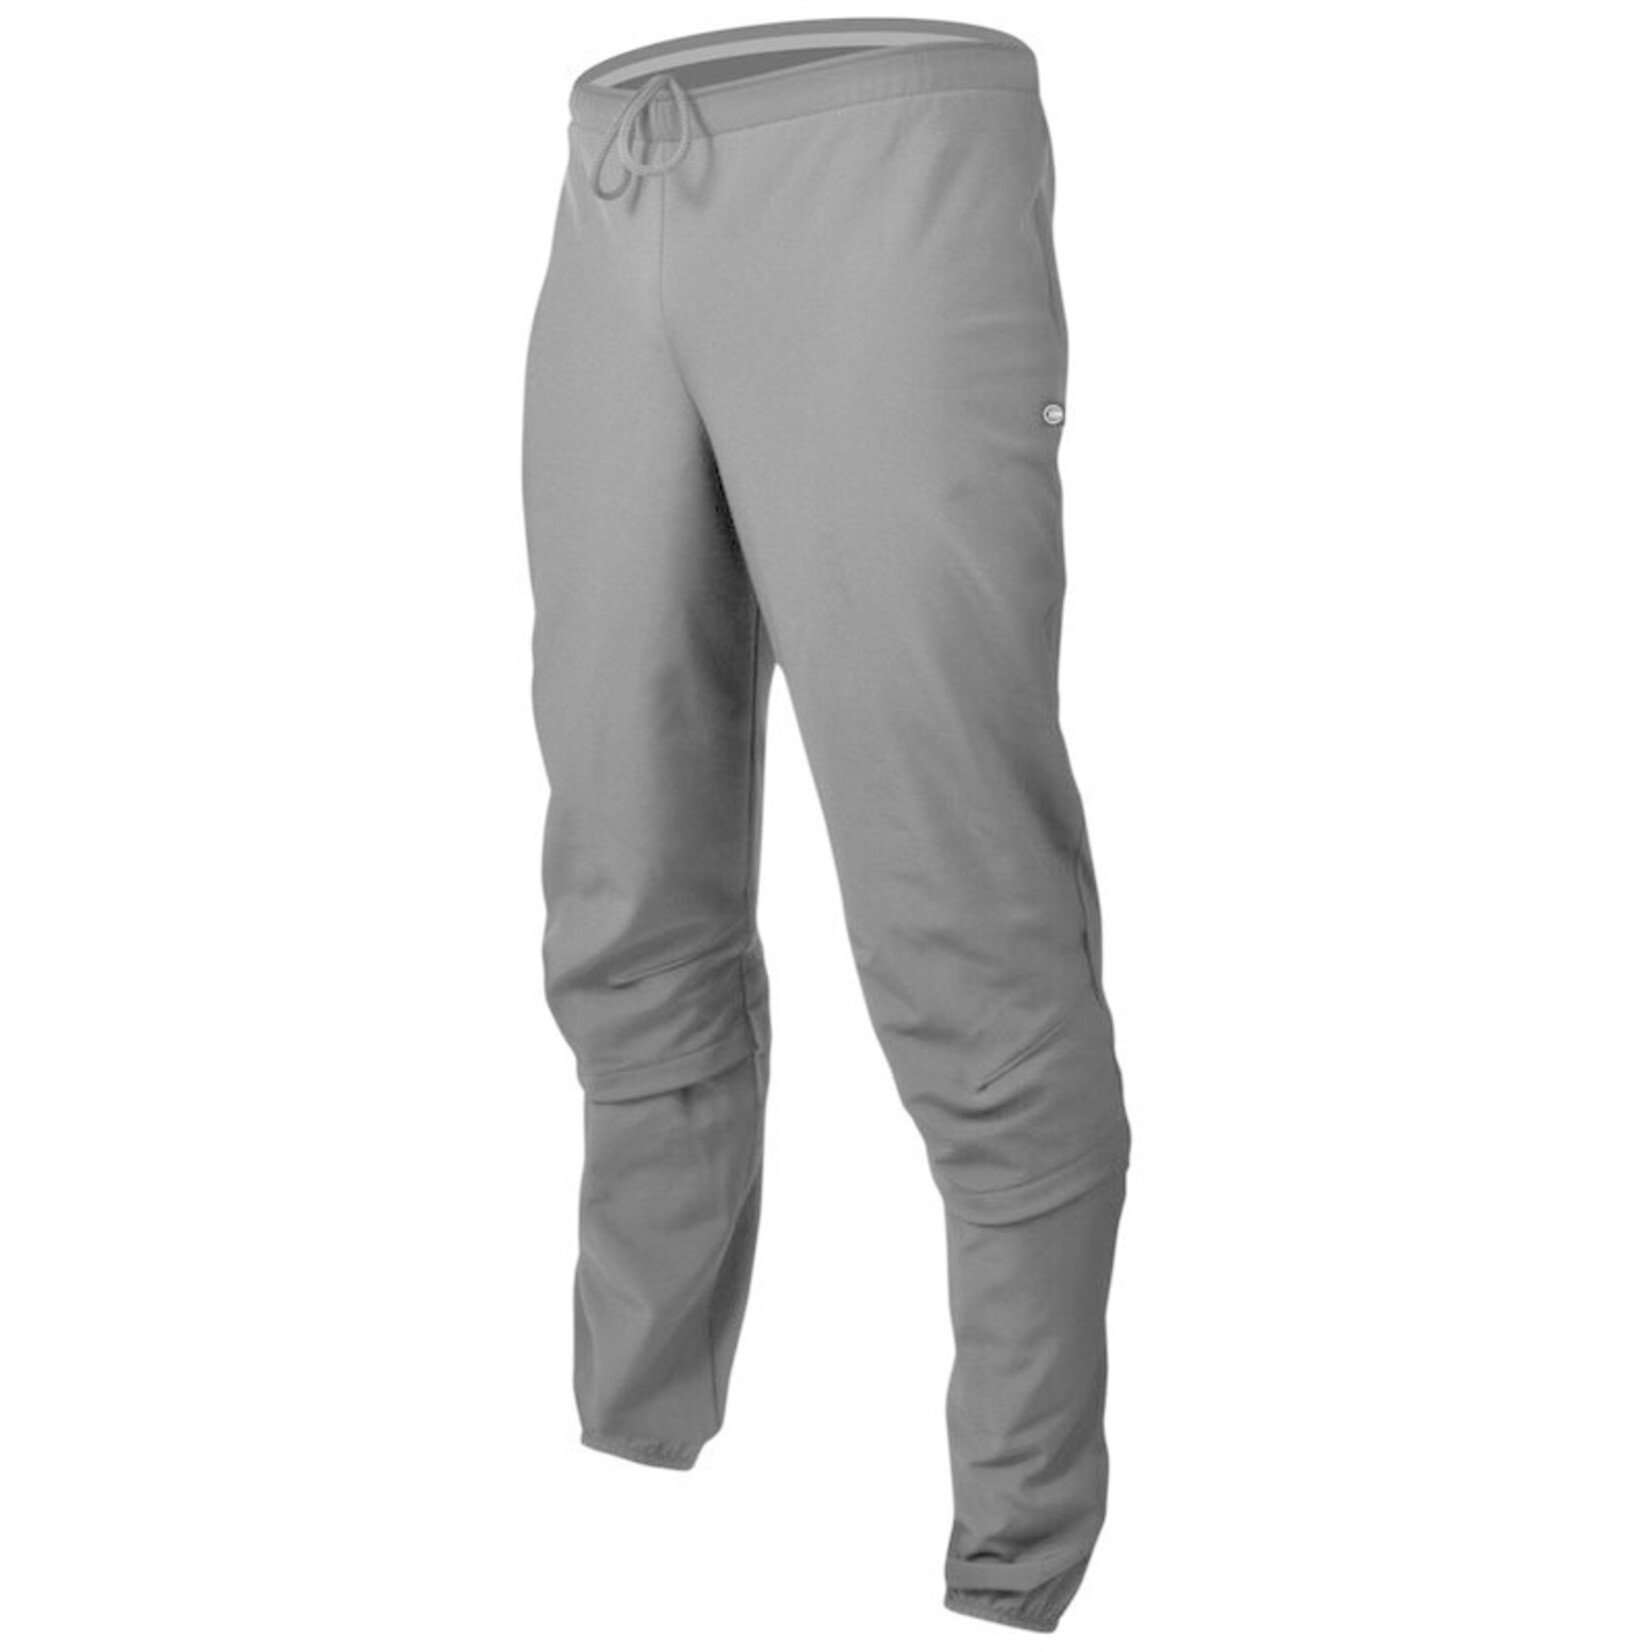 Aero Tech TALL Men's Thermal Windproof UNPADDED Pants